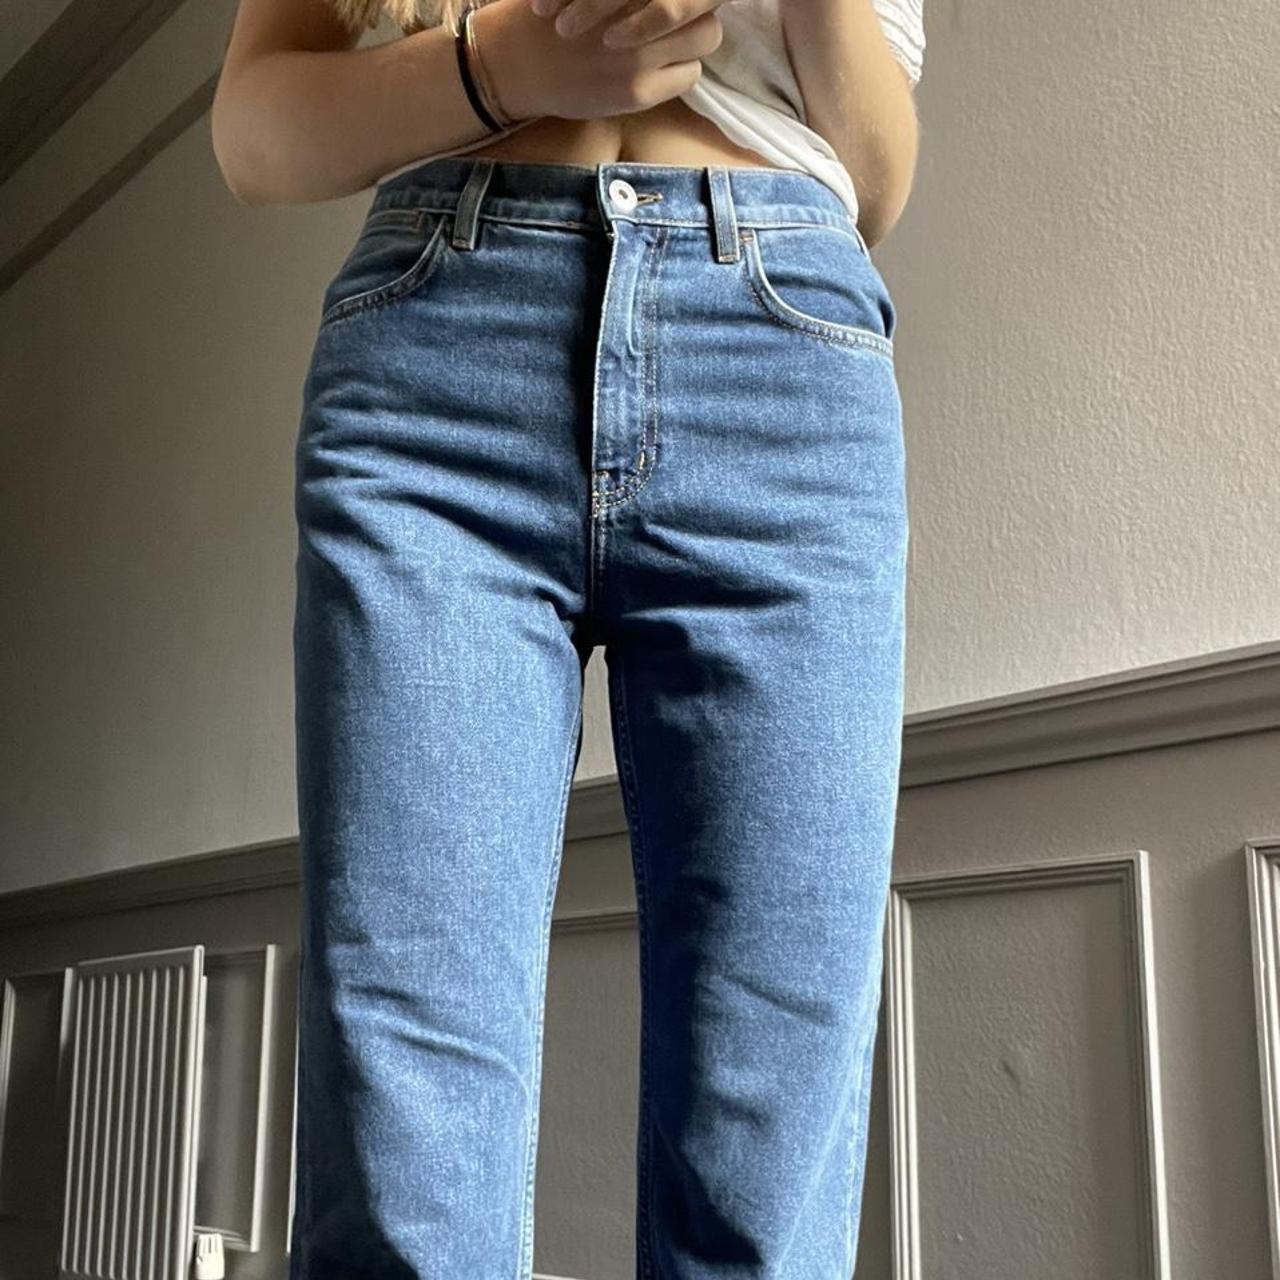 Cos jeans straight leg, waist 27 (cos sizes - about... - Depop